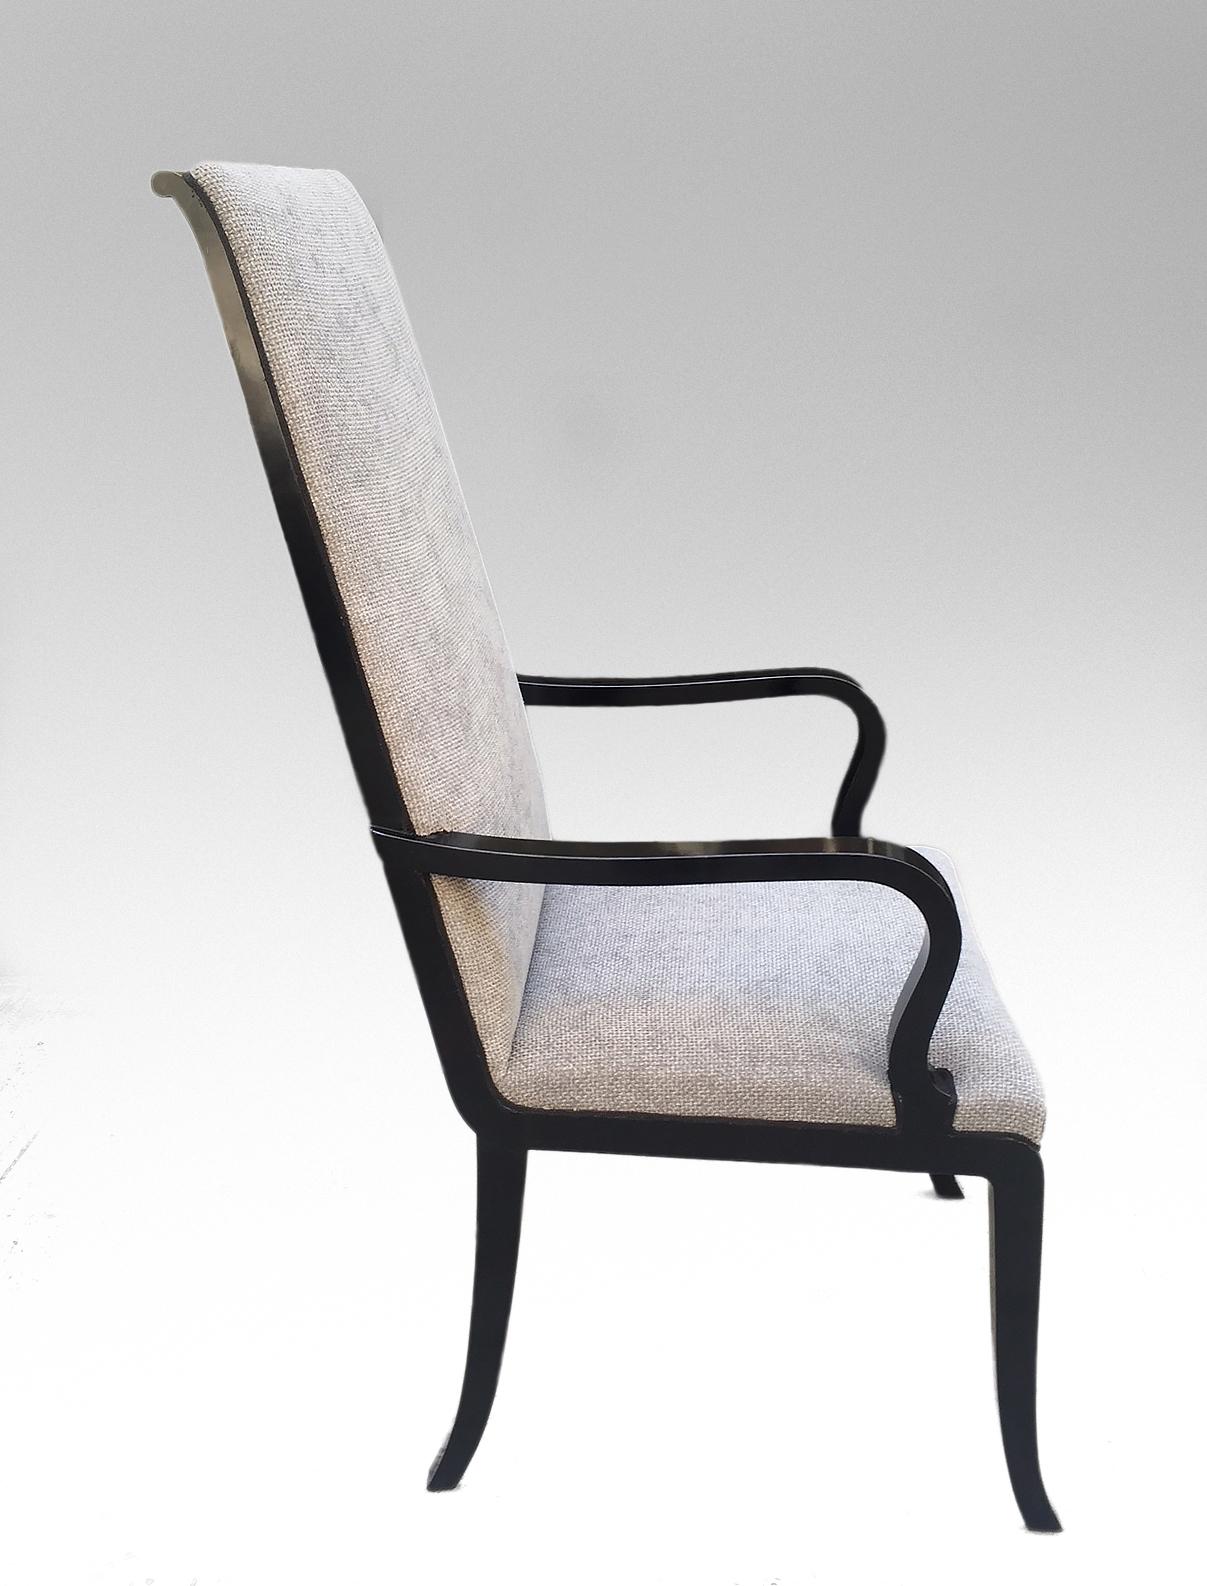 Alvar Andersson Swedish Pewter-Inlaid Ebonized Armchair
An elegant chair with high rectangular back inlaid with pewter, the arms gently scroll, resting on saber legs.
Deigned for Hyresgasternas Mobellaffar.
 